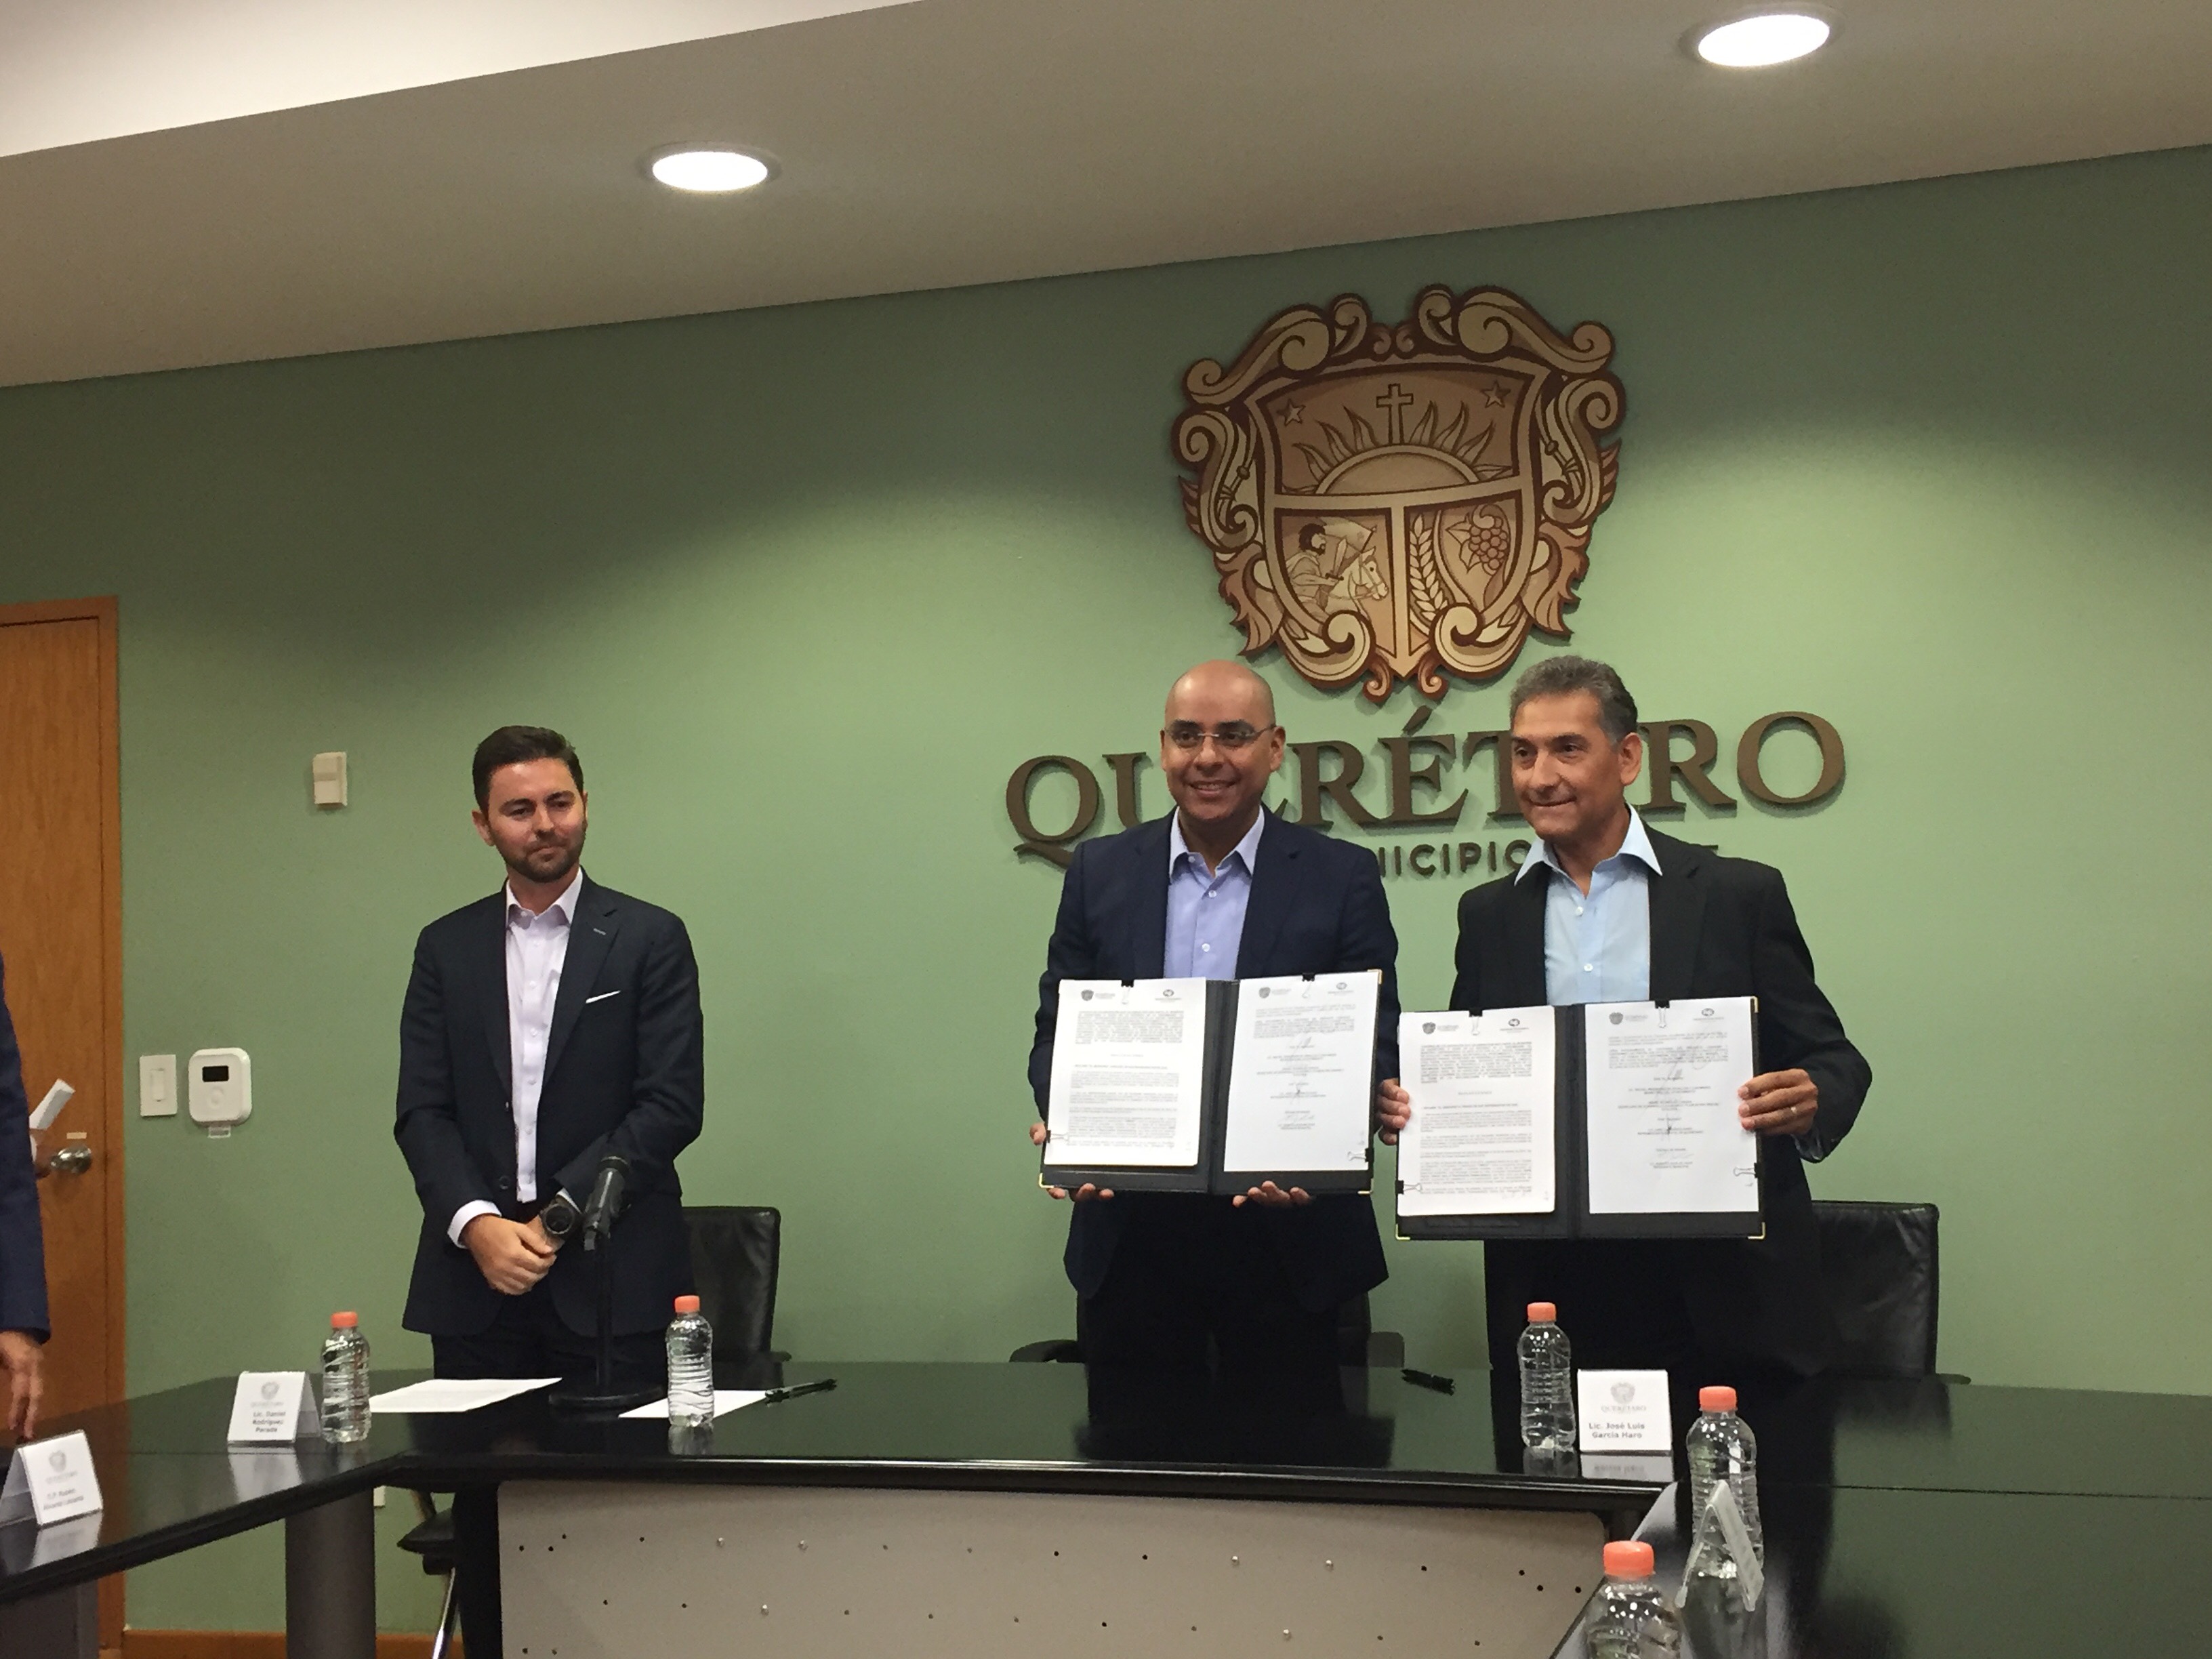  Municipio de Querétaro firma convenio con Nacional Financiera